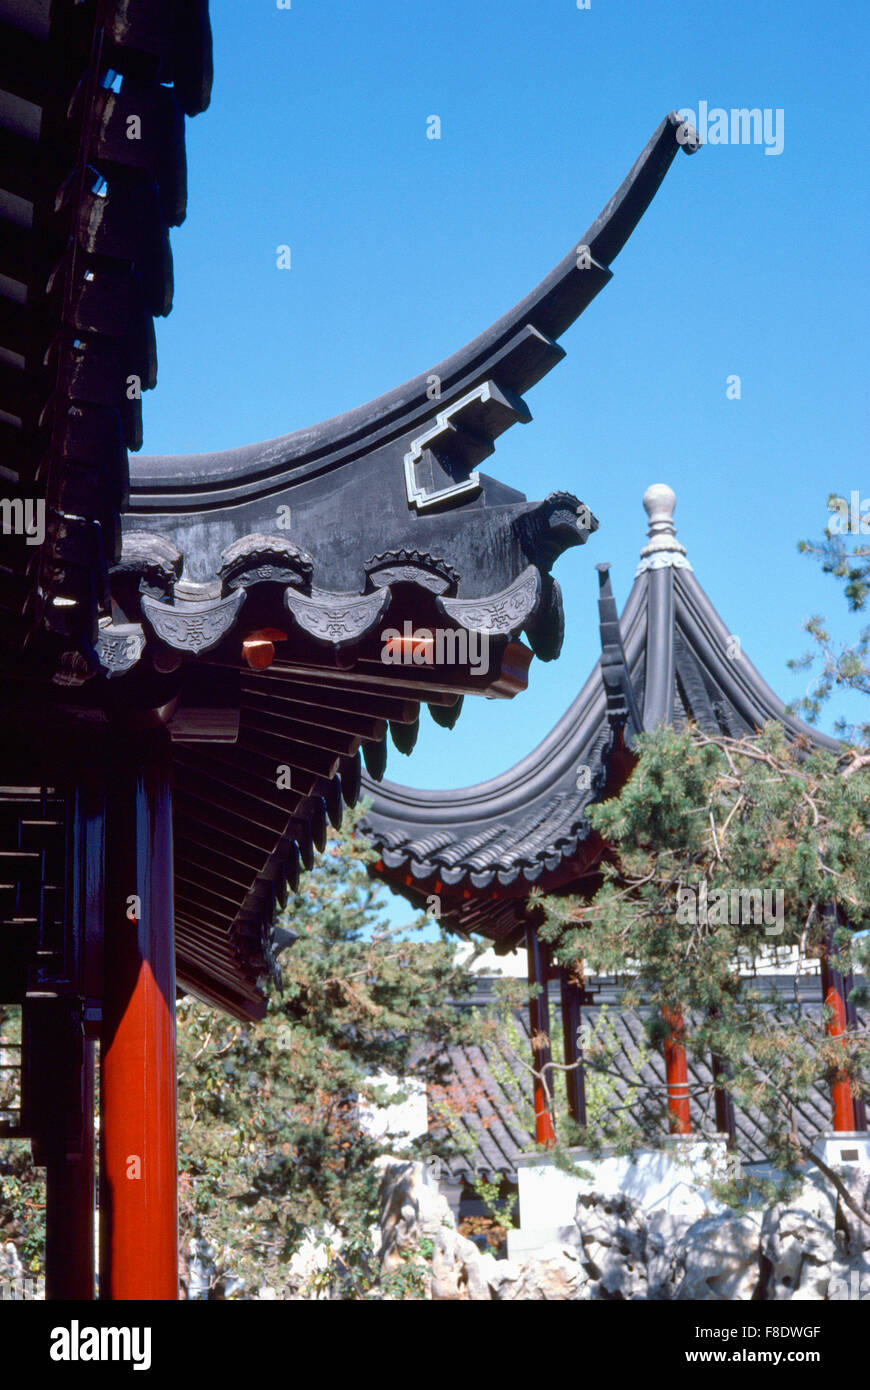 Dr. Sun Yat-Sen Classical Chinese Garden in Chinatown, Vancouver, BC, British Columbia, Canada - Chinese Pagoda Stock Photo